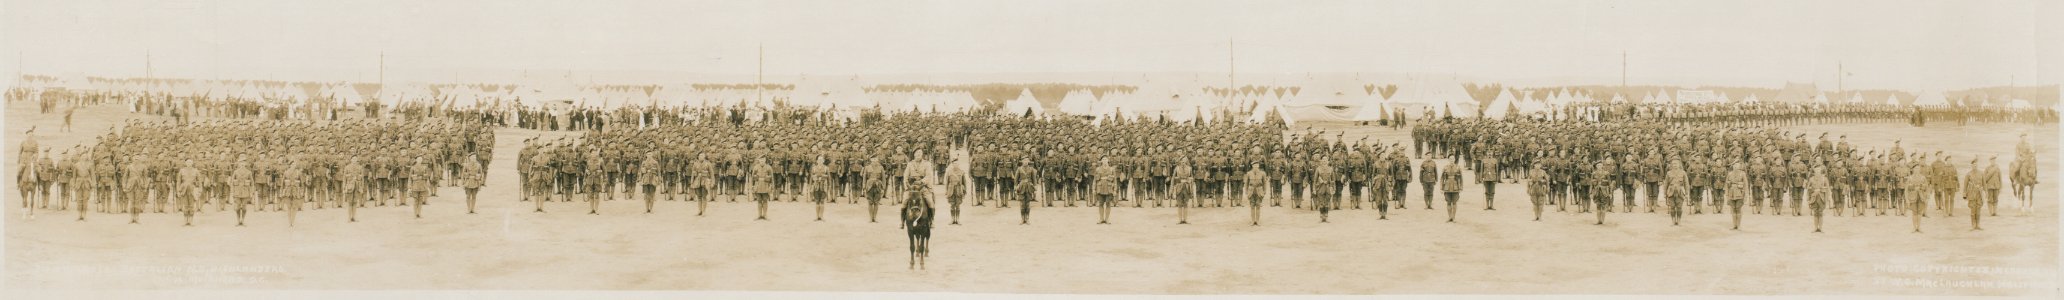 219th Overseas Battalion, Nova Scotia Highlanders, Lt.-Col. Muirhead, OC (HS85-10-32004) photo